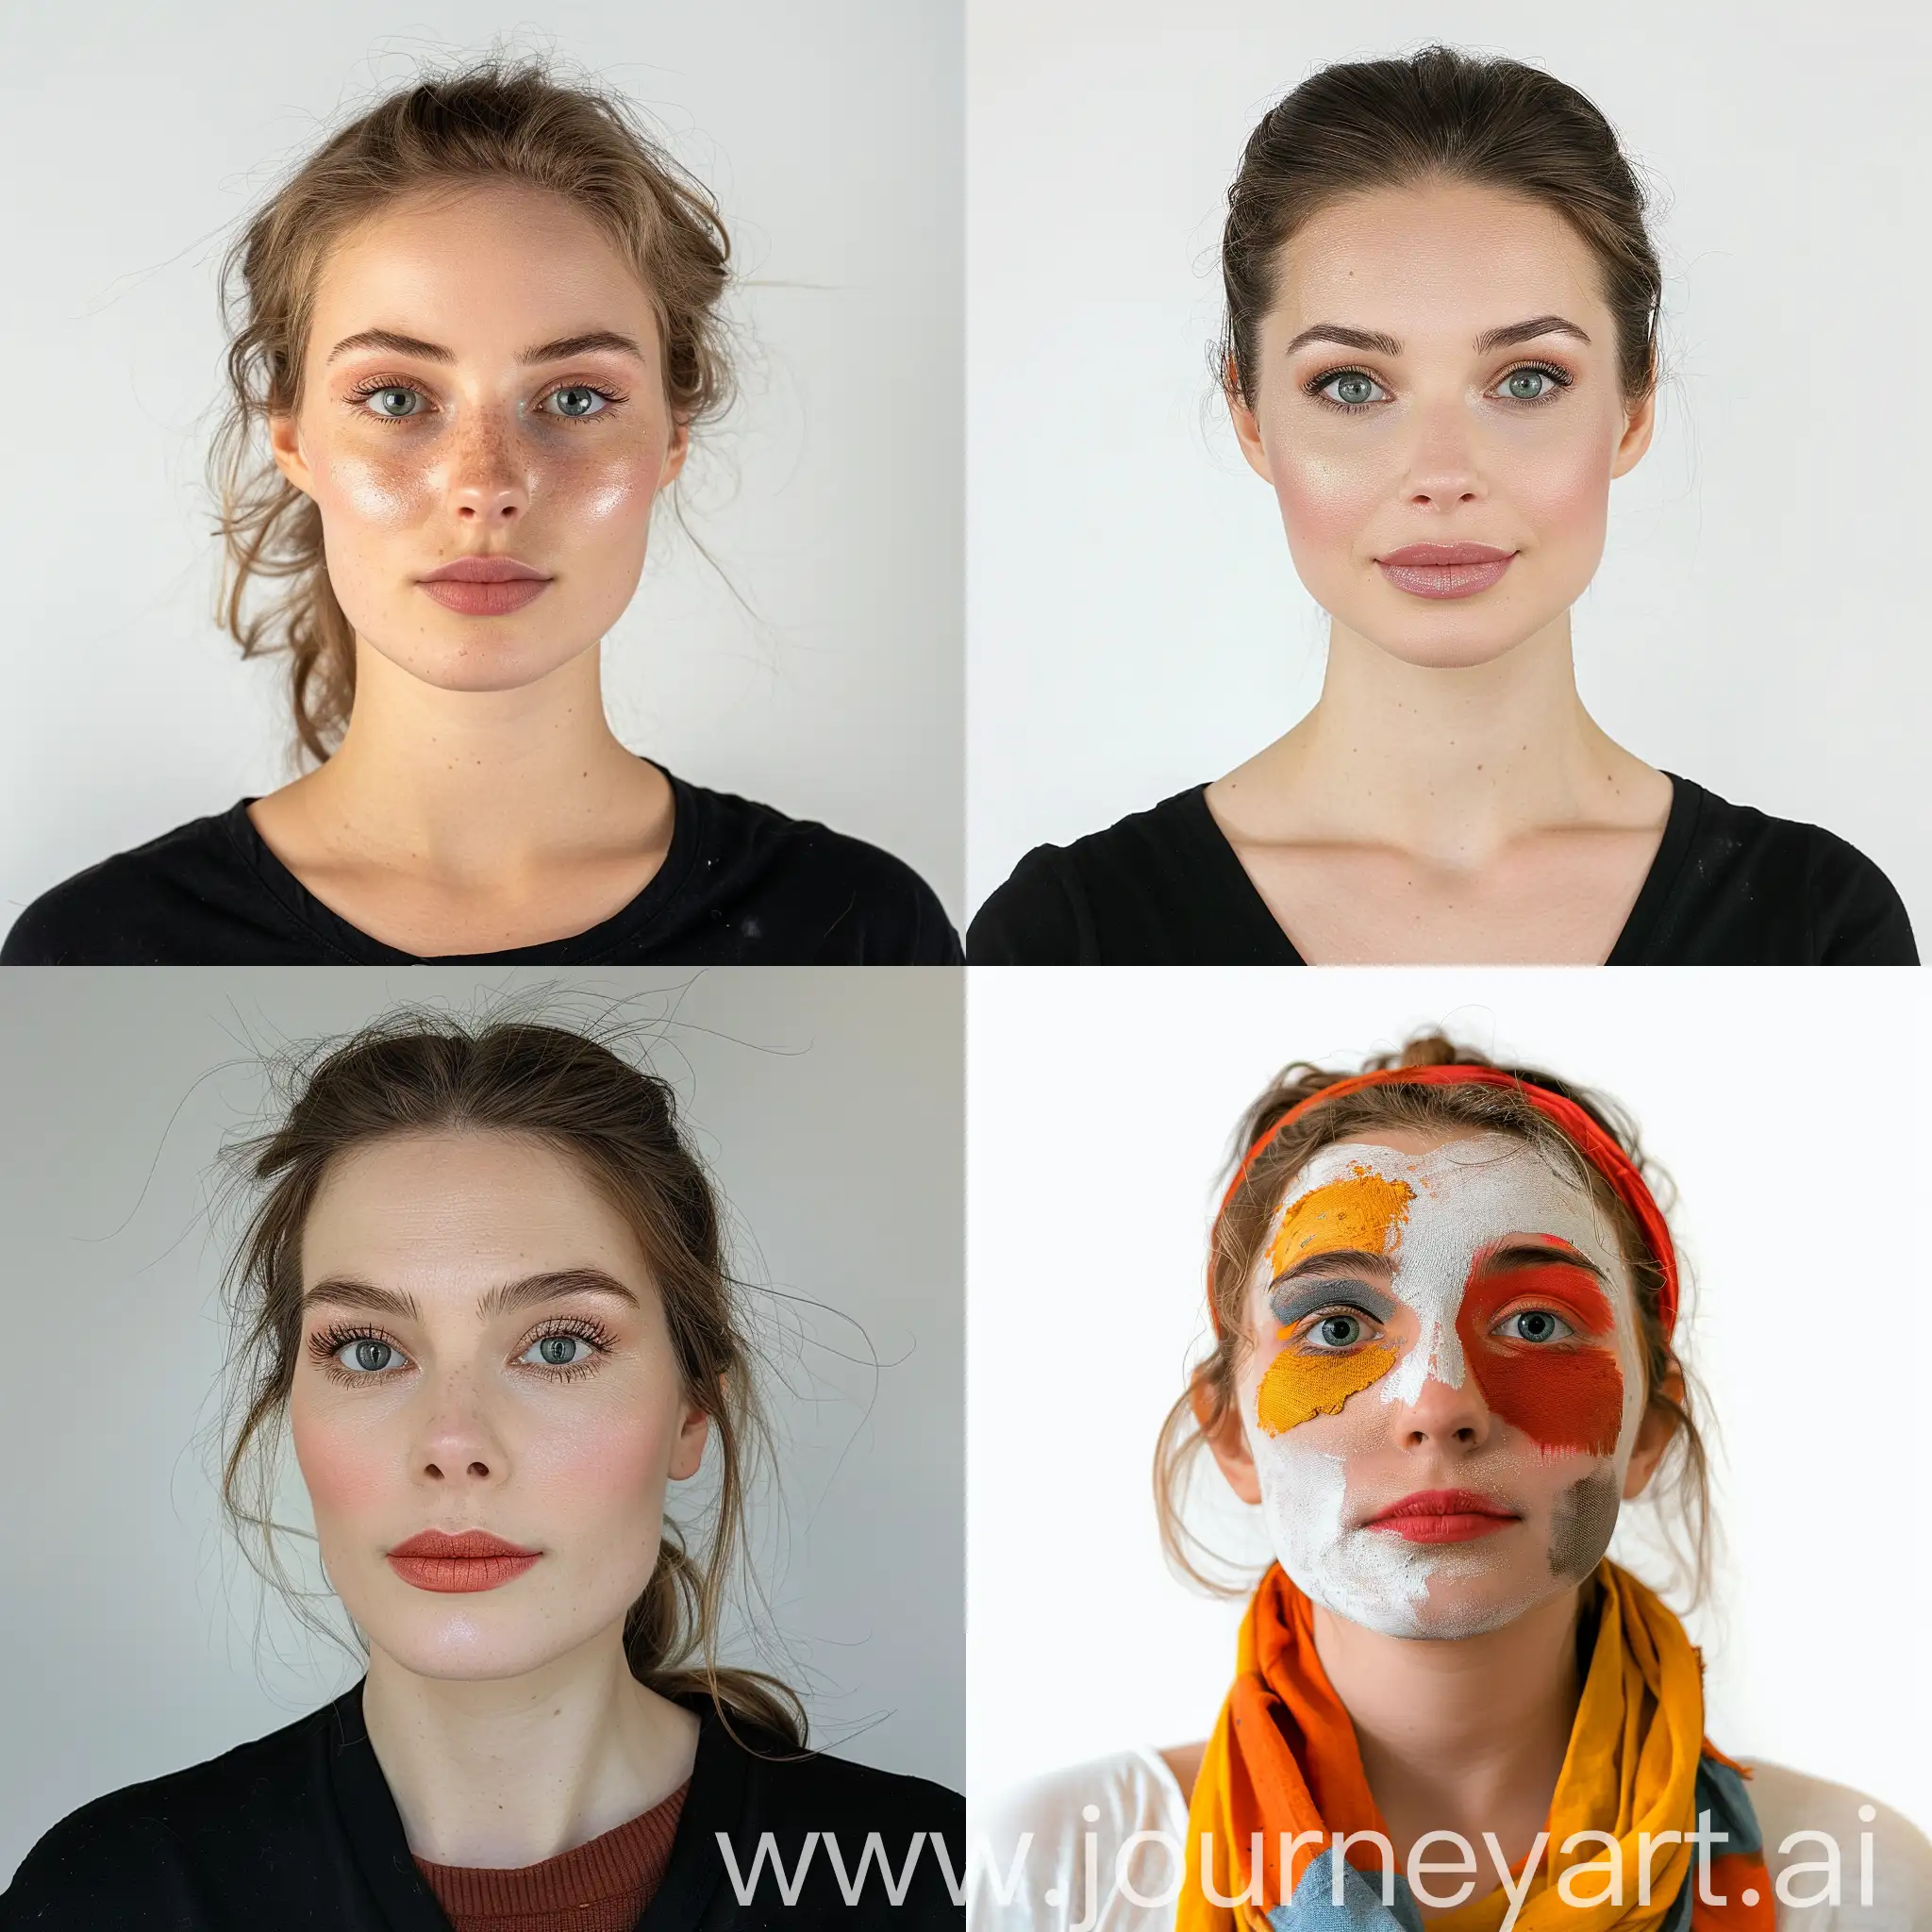 European-Female-Makeup-Artist-on-White-Background